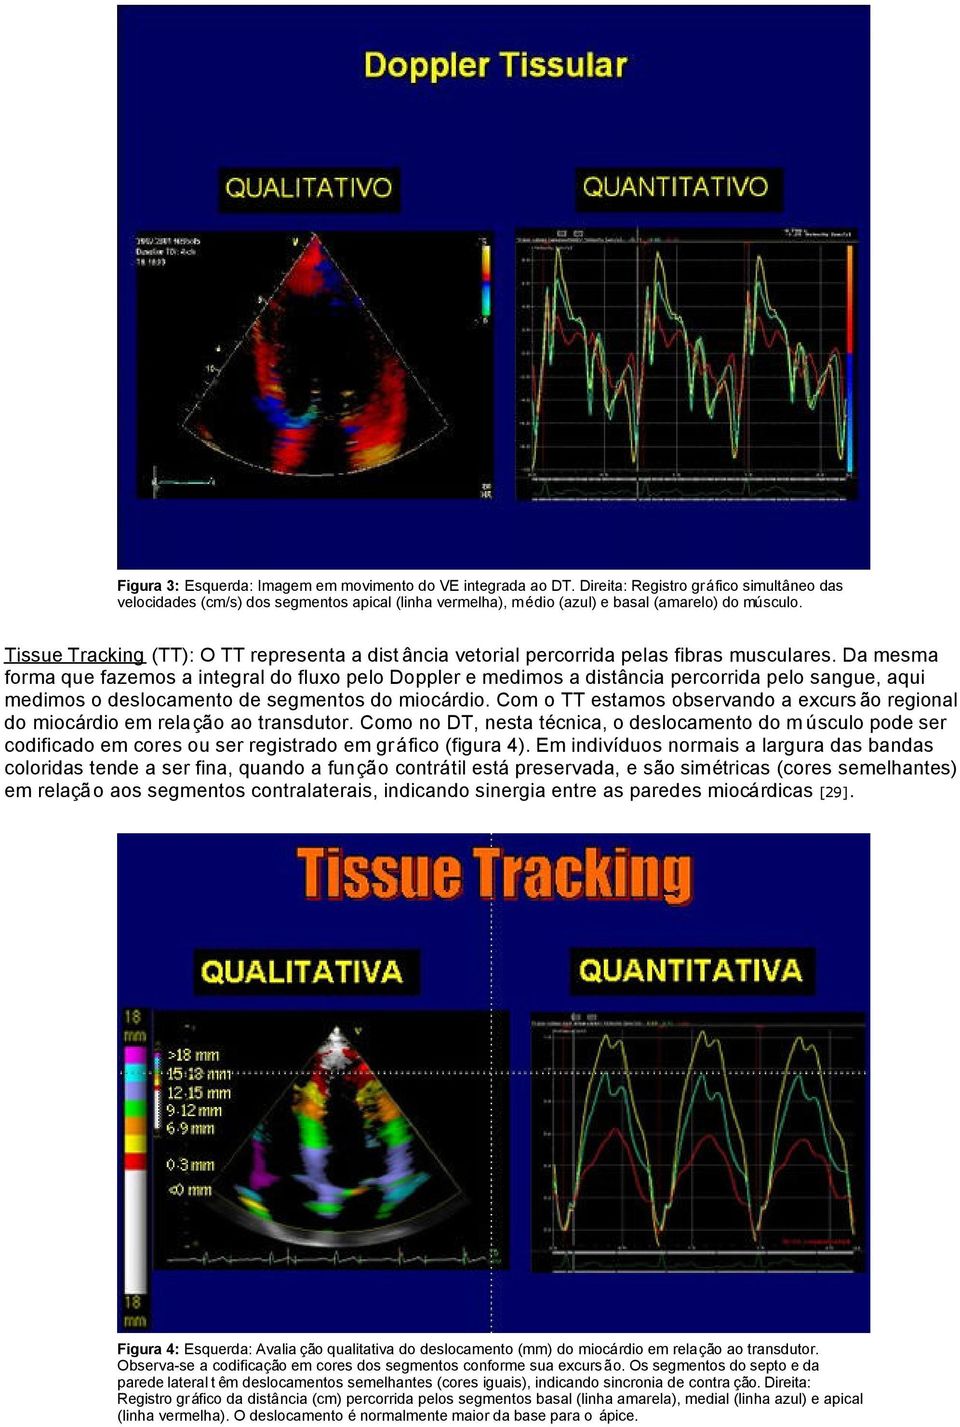 Tissue Tracking (TT): O TT representa a dist ância vetorial percorrida pelas fibras musculares.